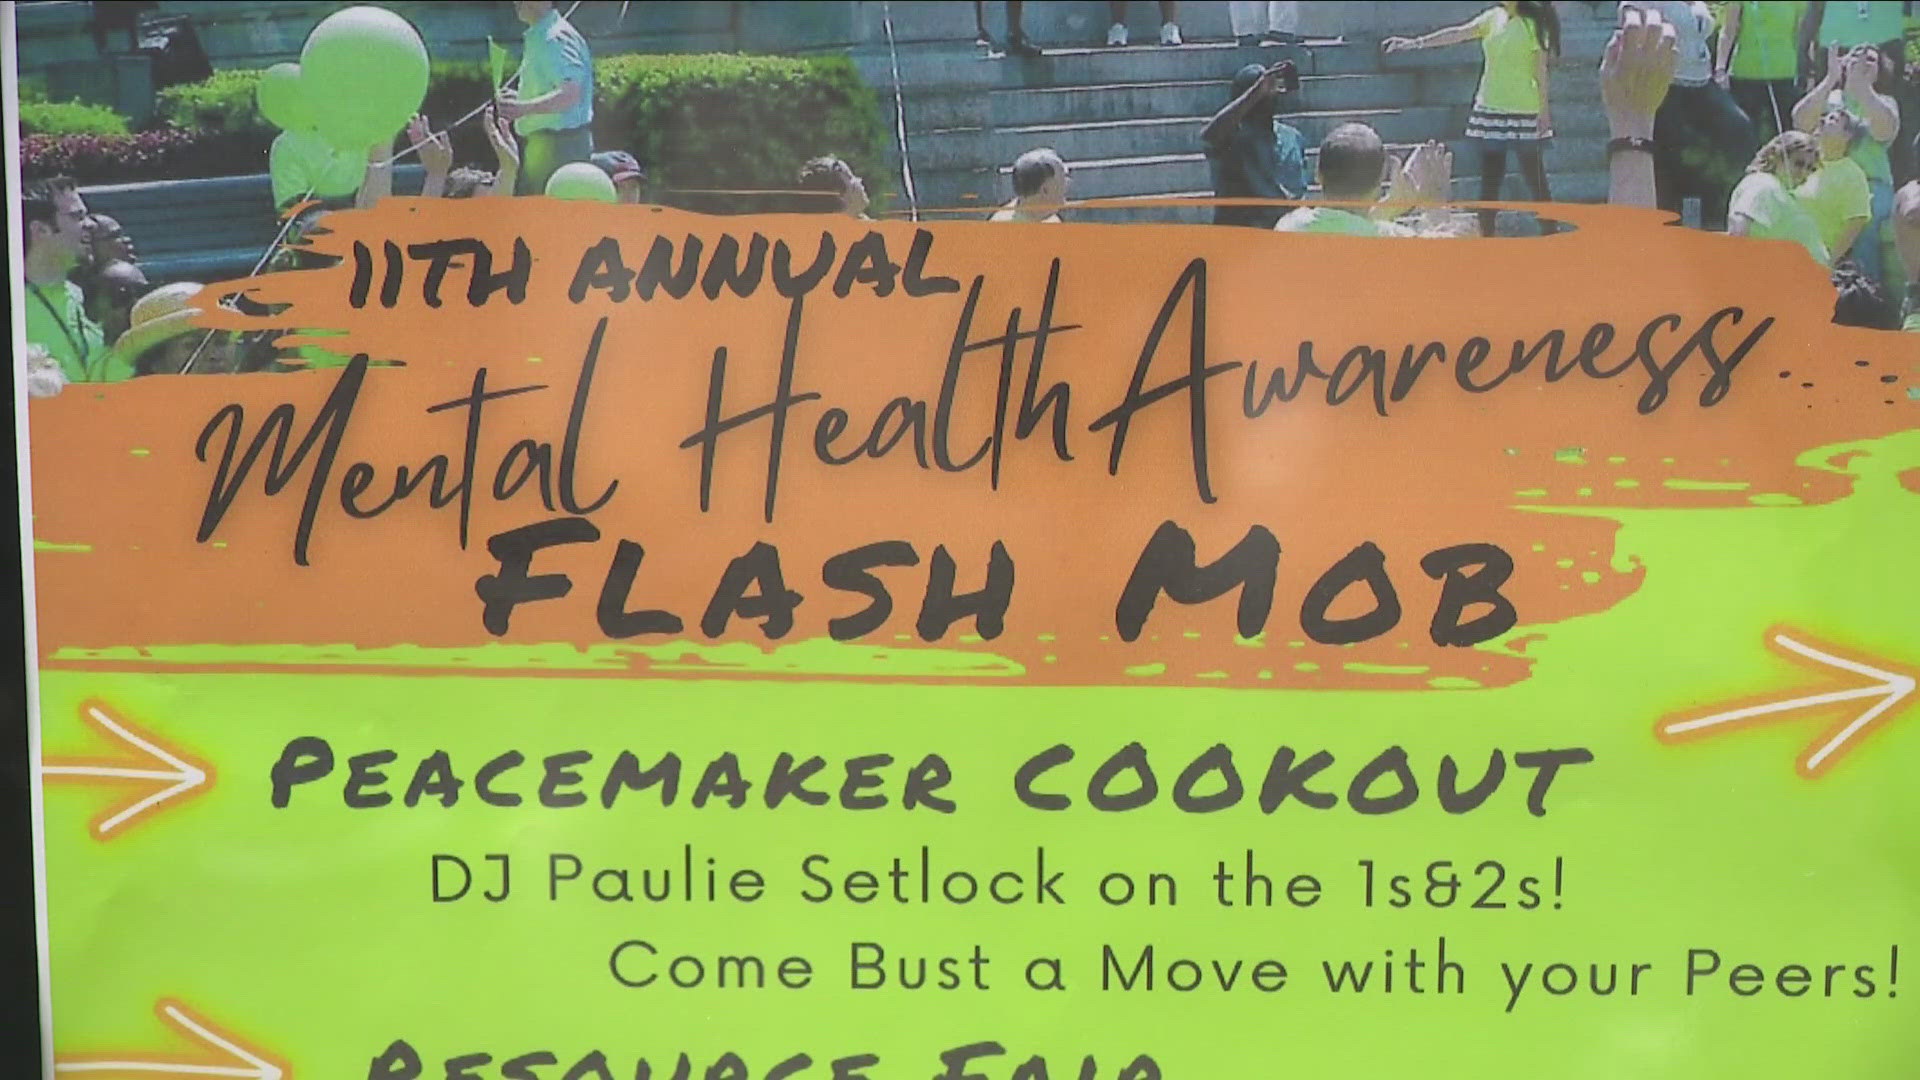 Most Buffalo: 'Mental Health Awareness Flash Mob'